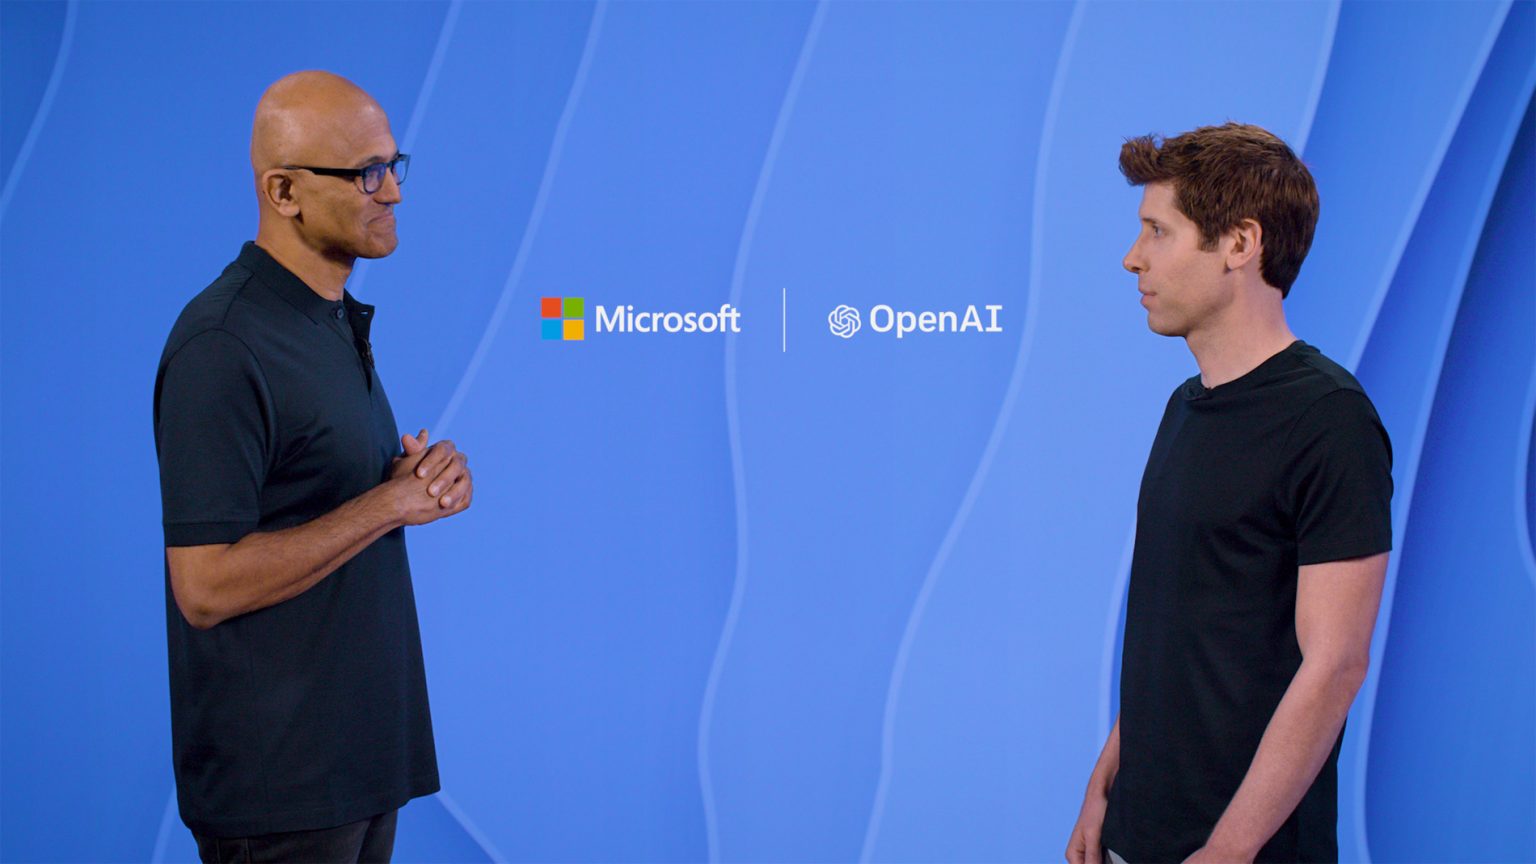 Does Microsoft’s Future Depend on OpenAI?